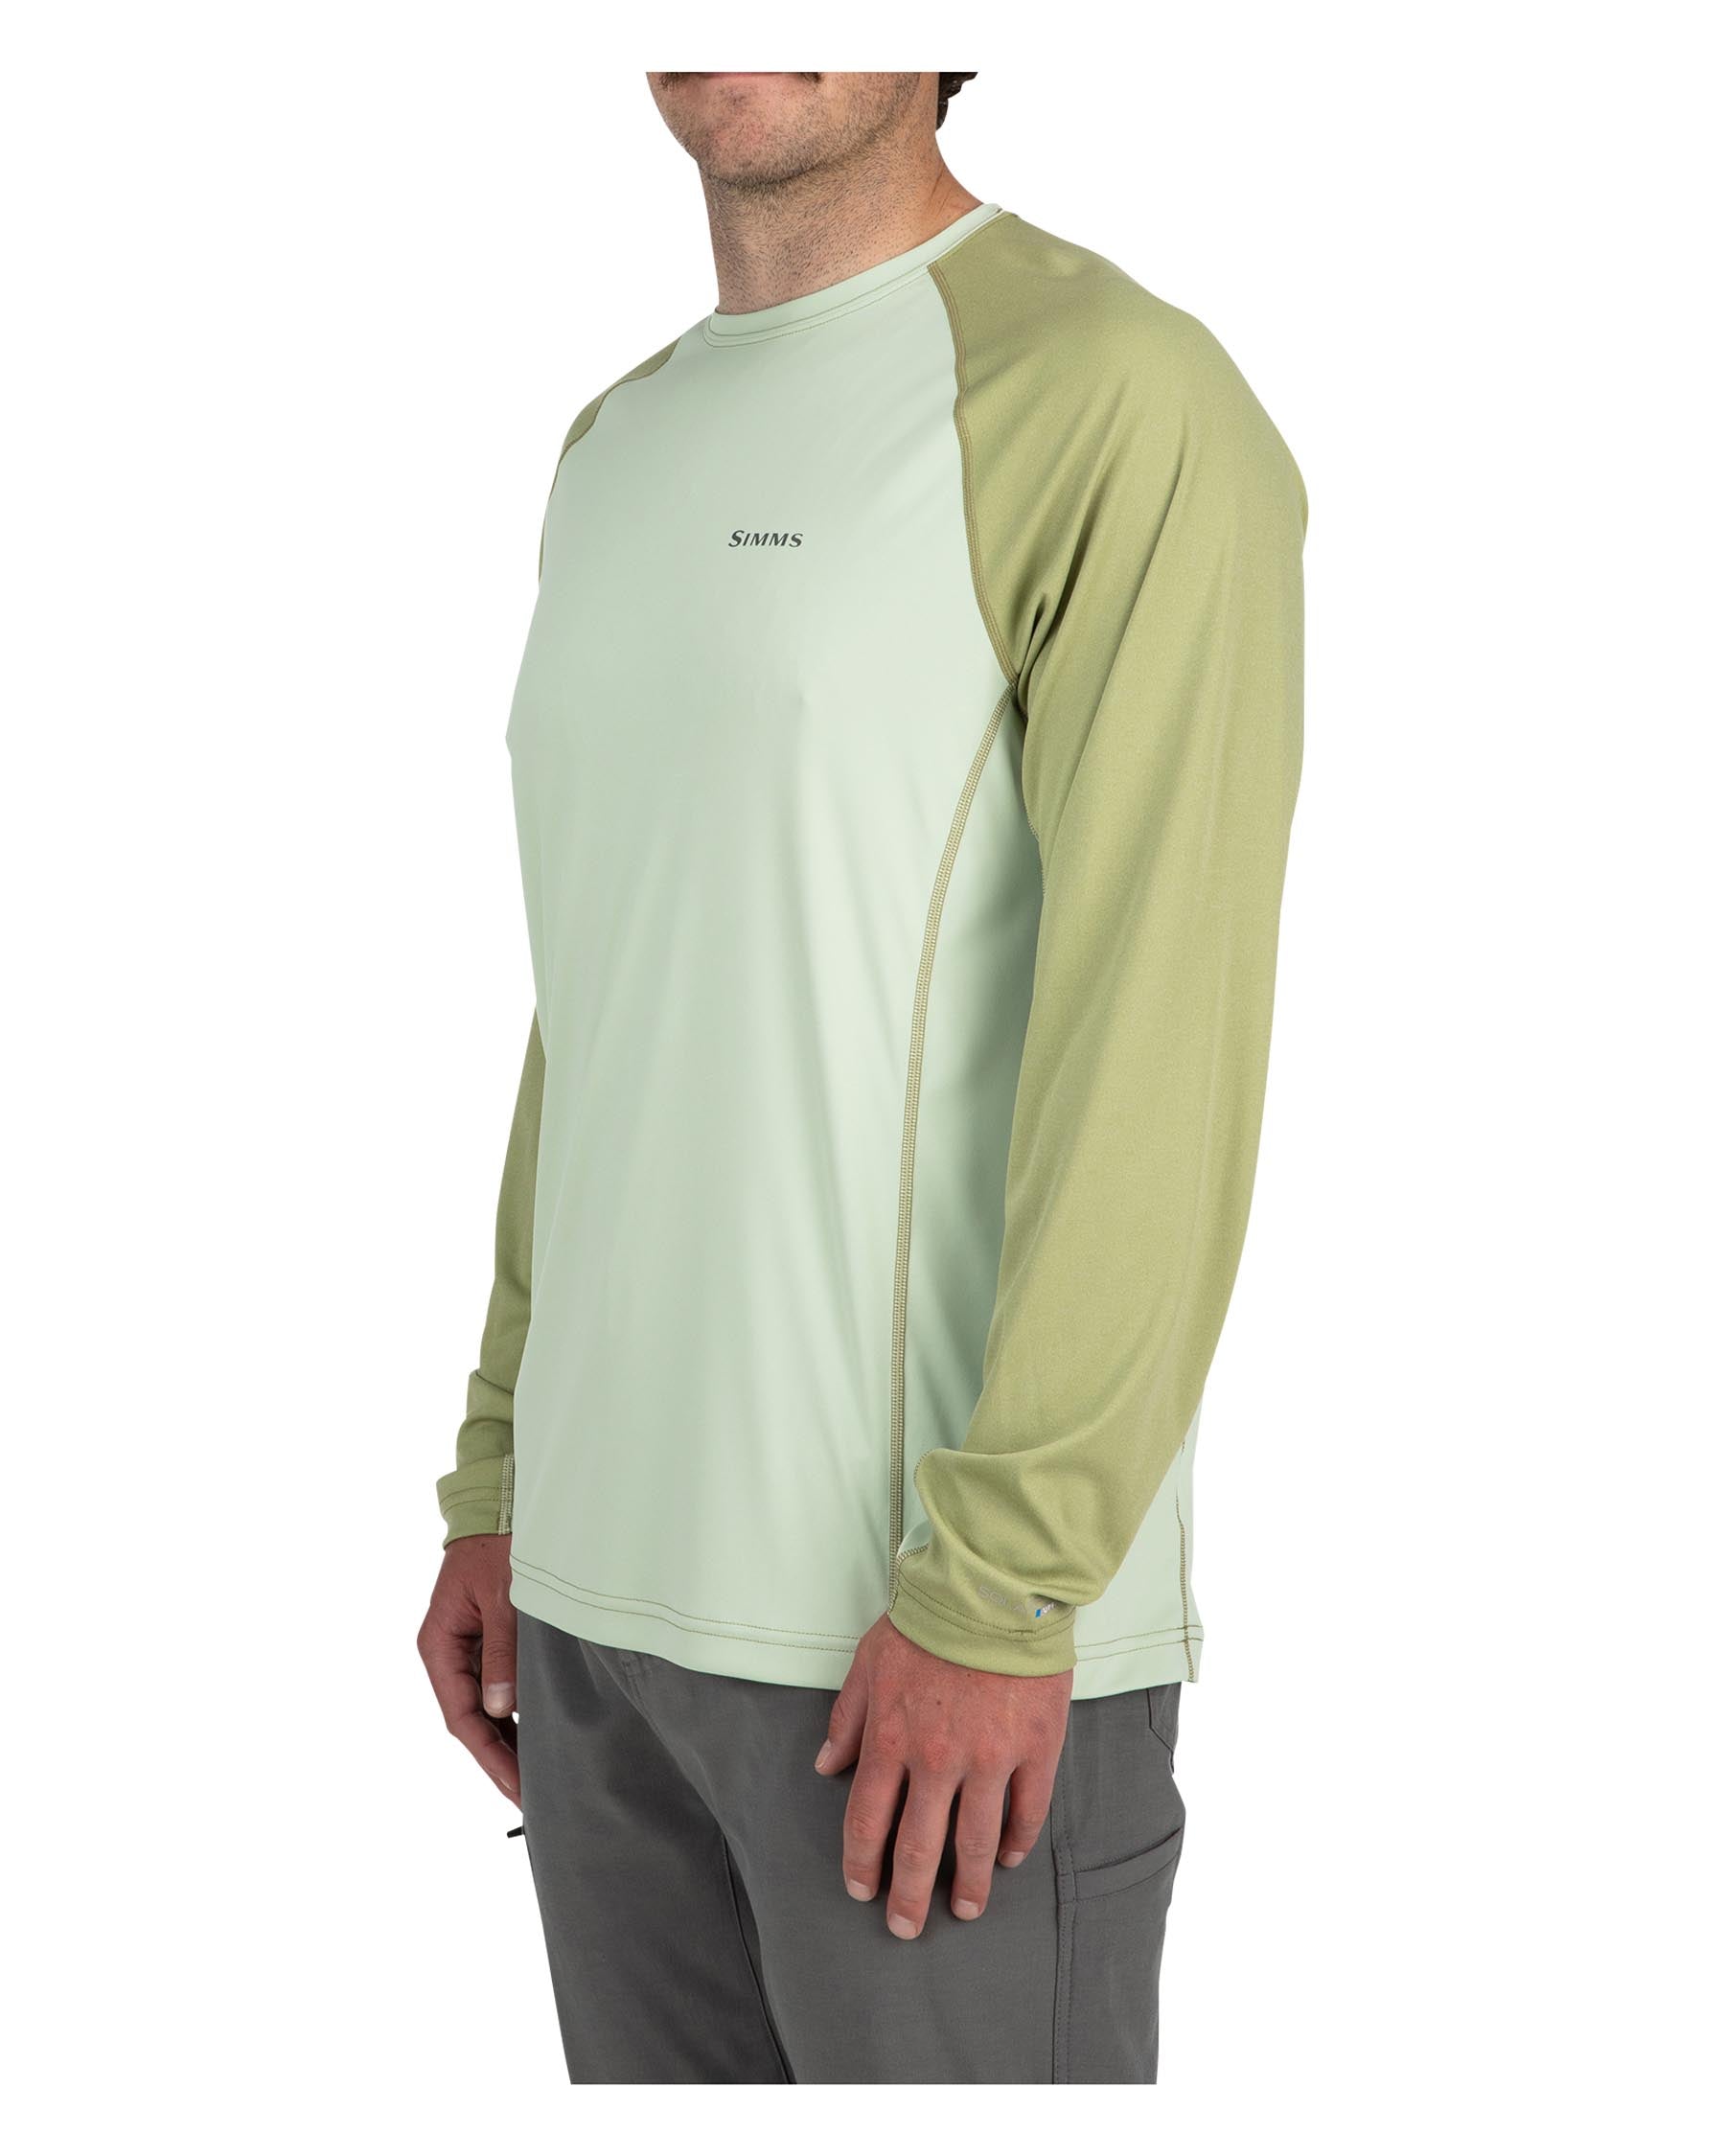 M's SolarFlex® Crewneck Shirt - Solid | Simms Fishing Products